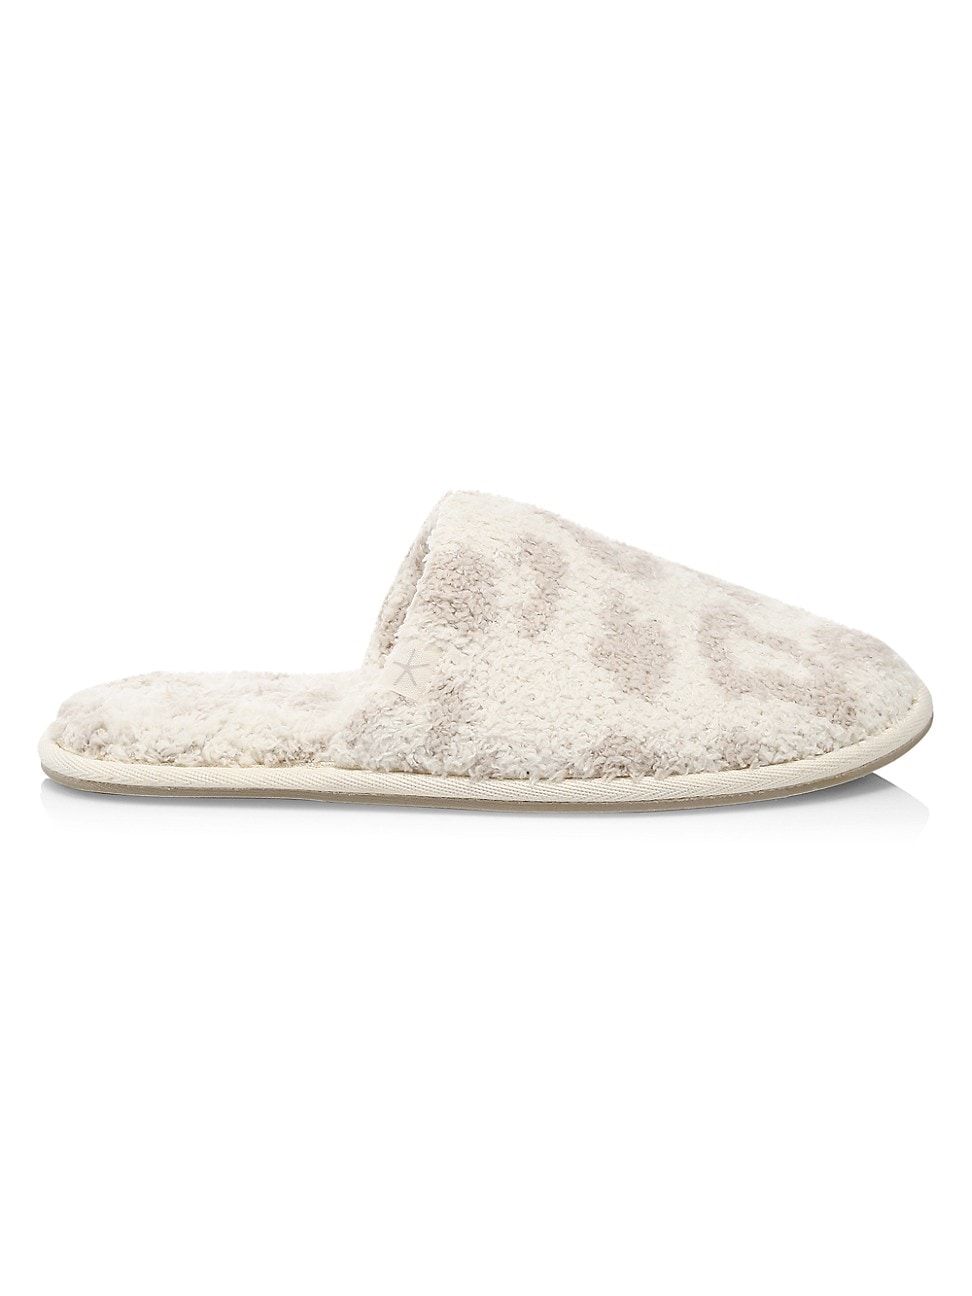 Barefoot Dreams Women's Cozychic Leopard-Print Slippers - Cream - Size Small | Saks Fifth Avenue